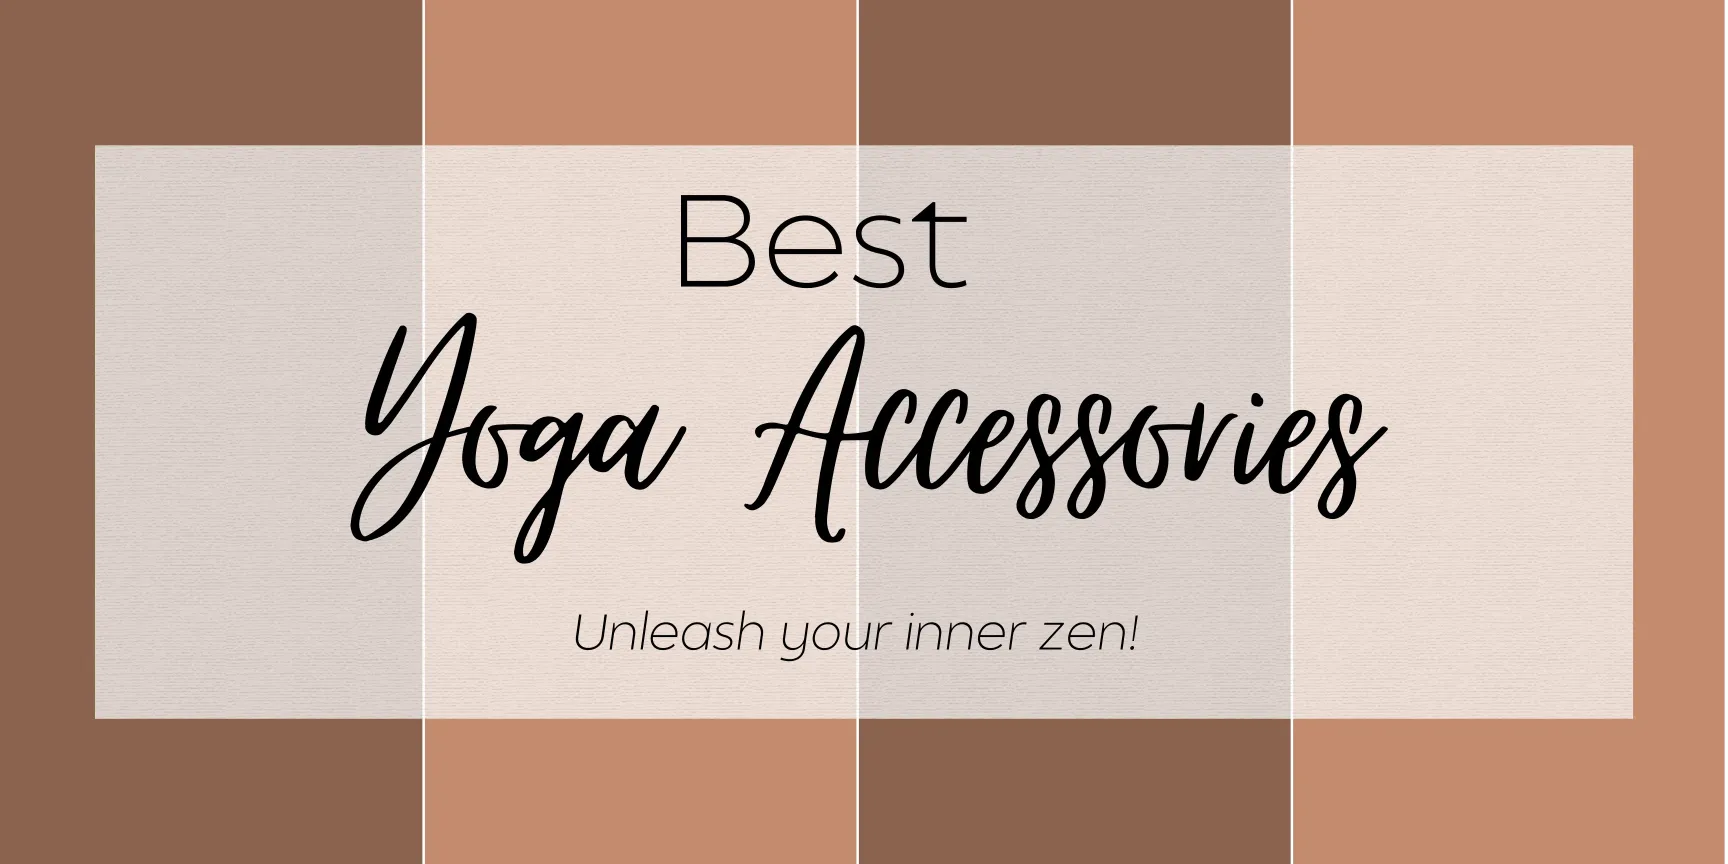 best yoga accessories